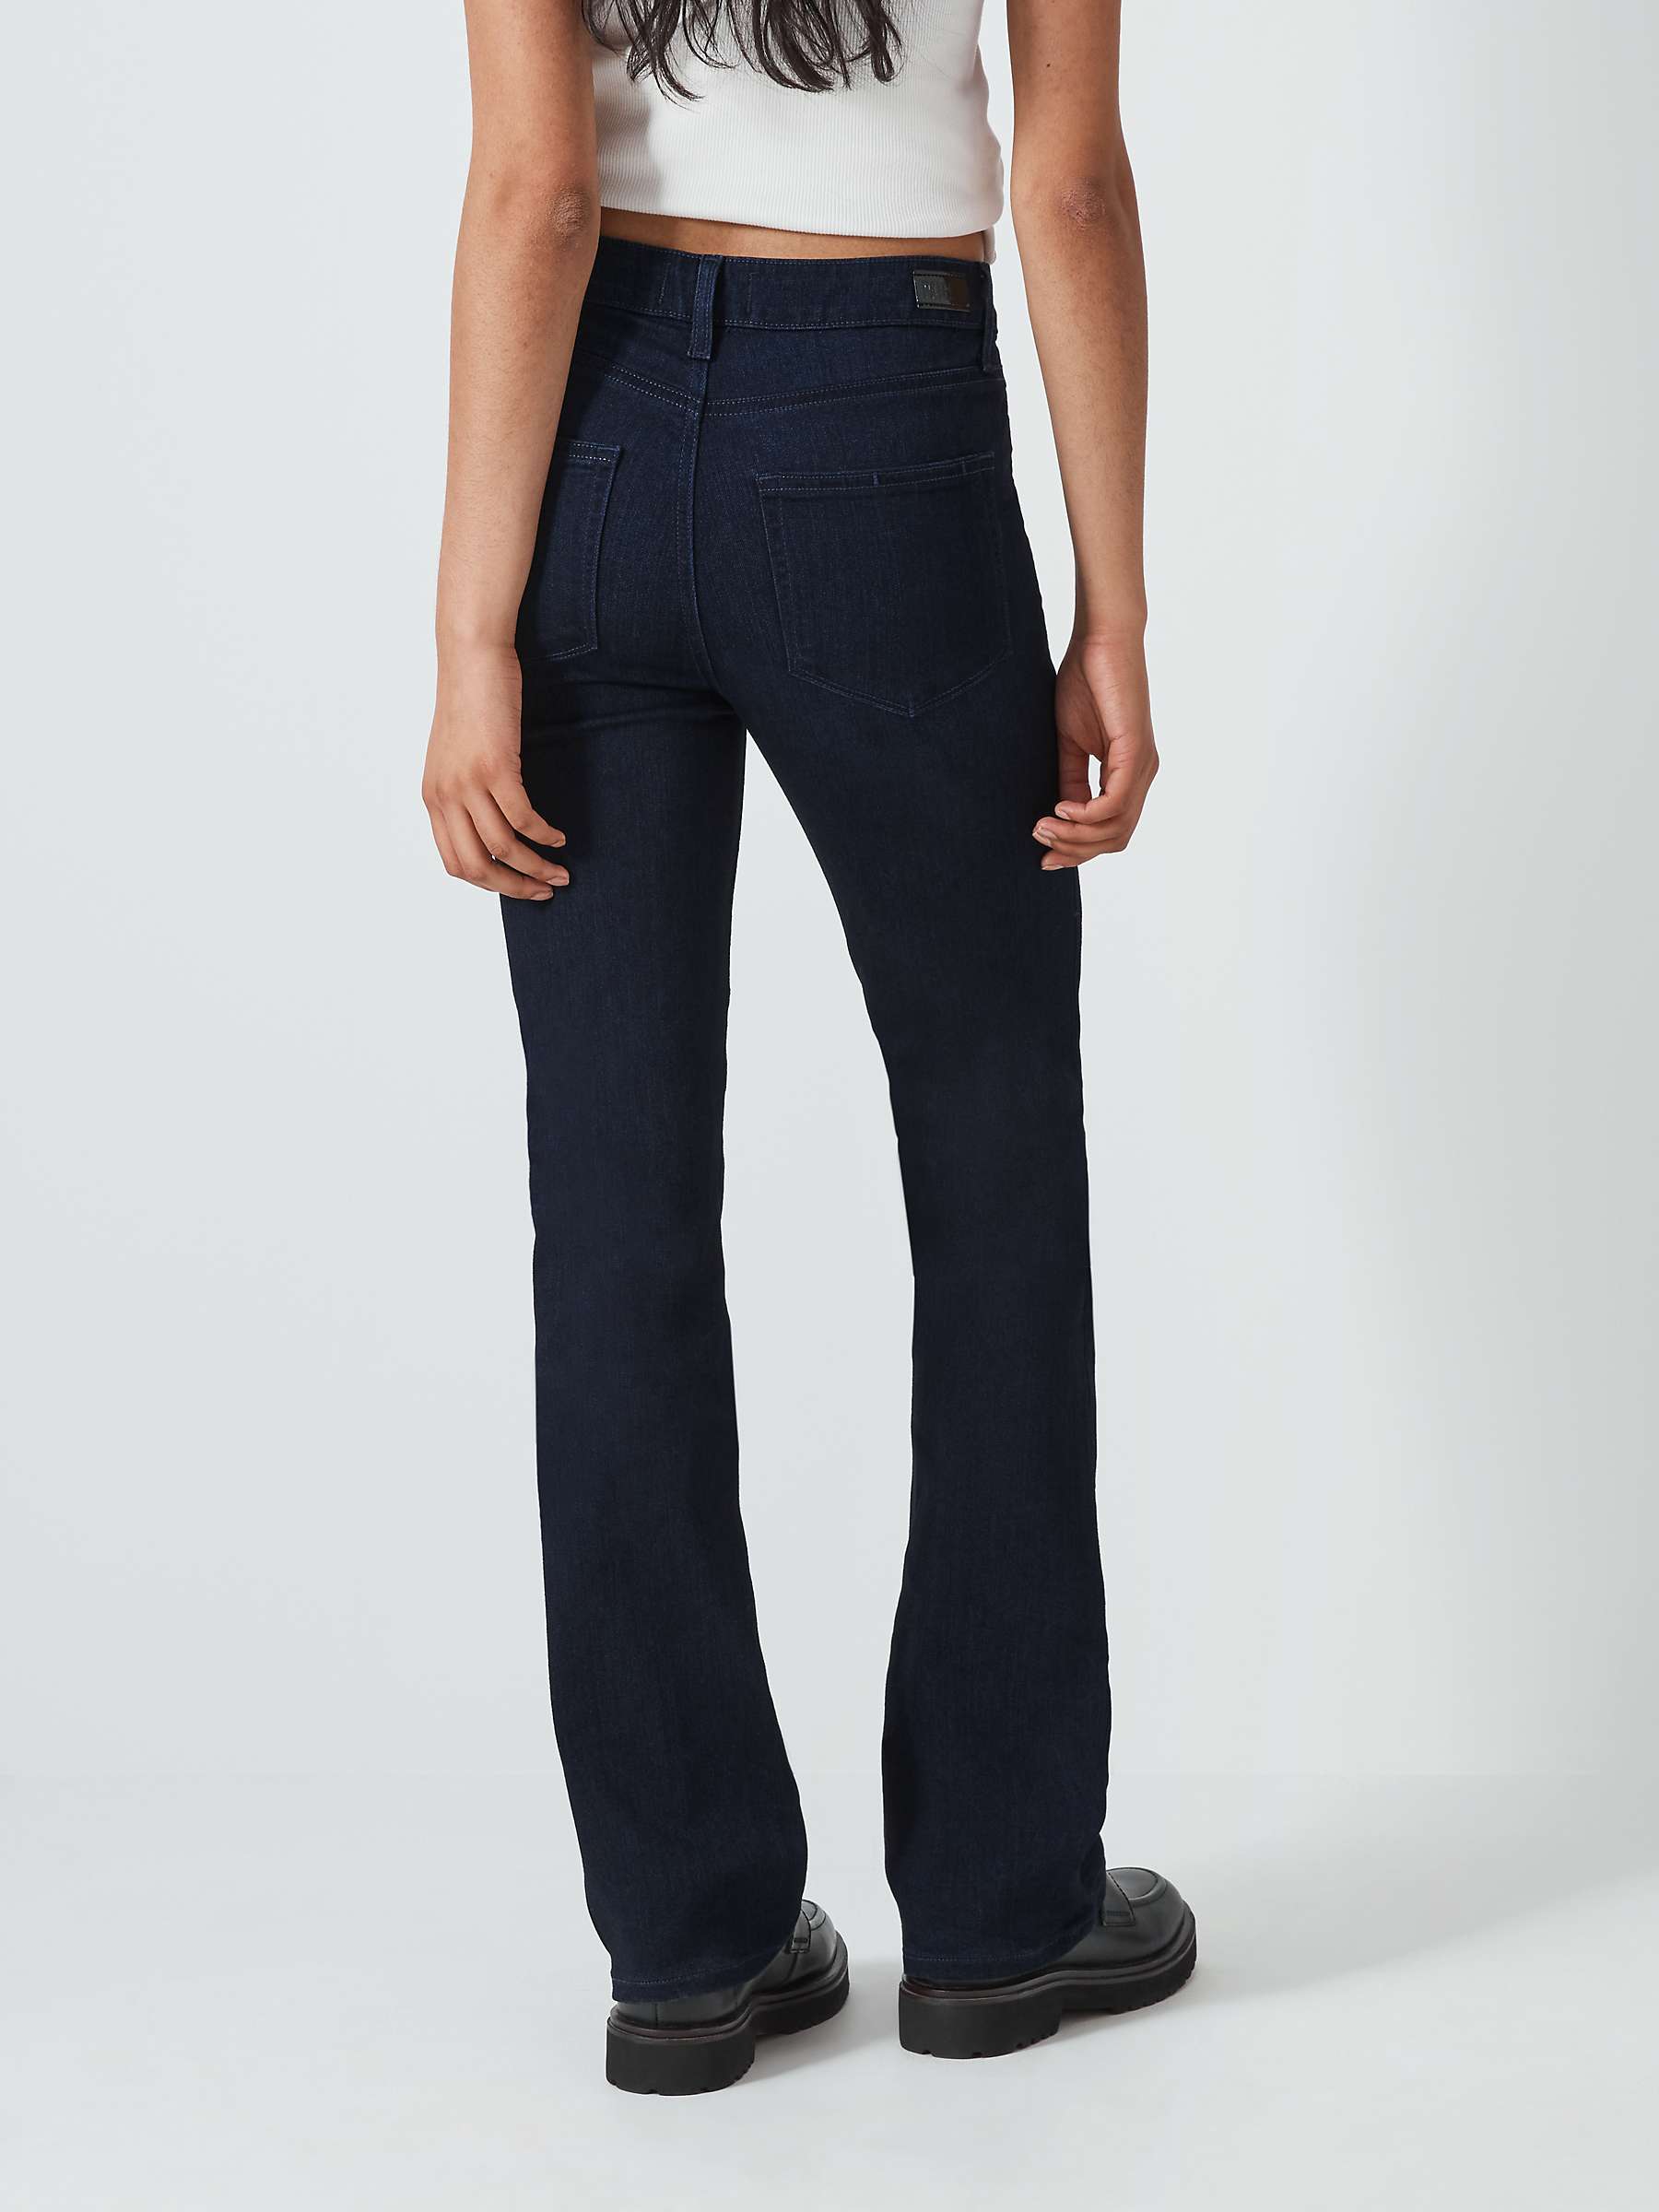 Buy PAIGE High Rise Manhattan Bootcut Jeans, Lana Online at johnlewis.com